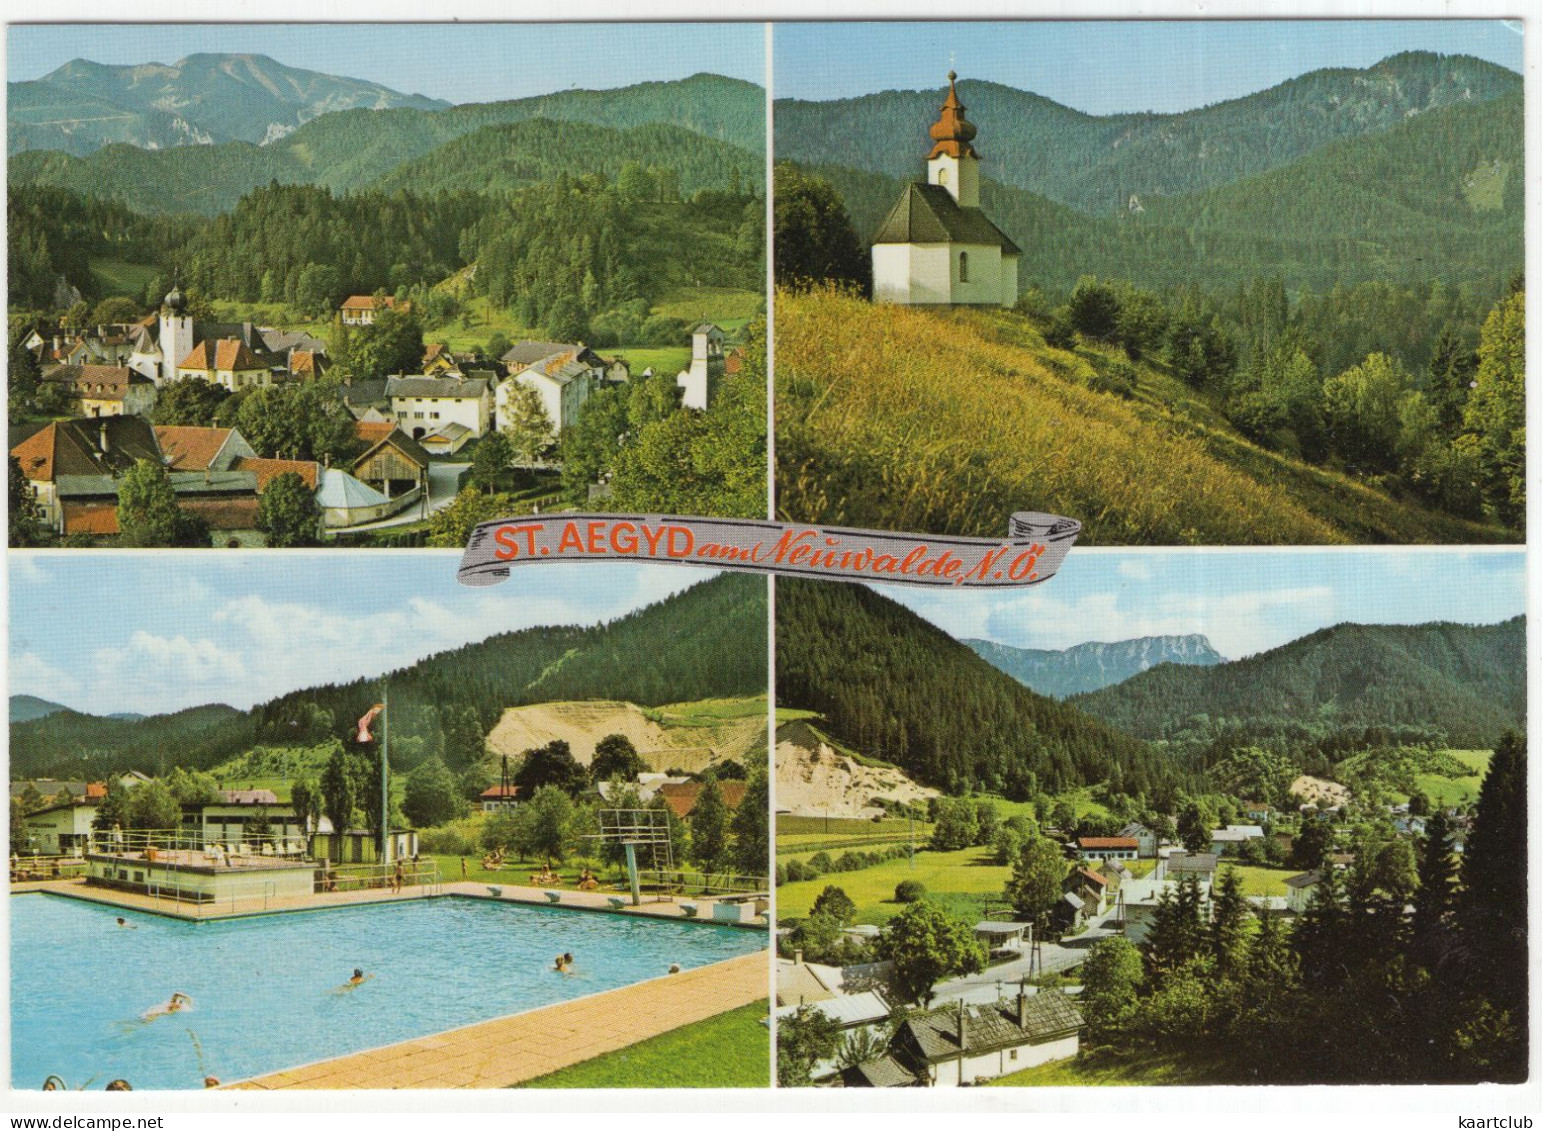 Sommerfrische St. Aegyd A. Neuwalde - Göller, Osterkirchen, Golferbad, Gippel - (NÖ, Austria) - Lilienfeld